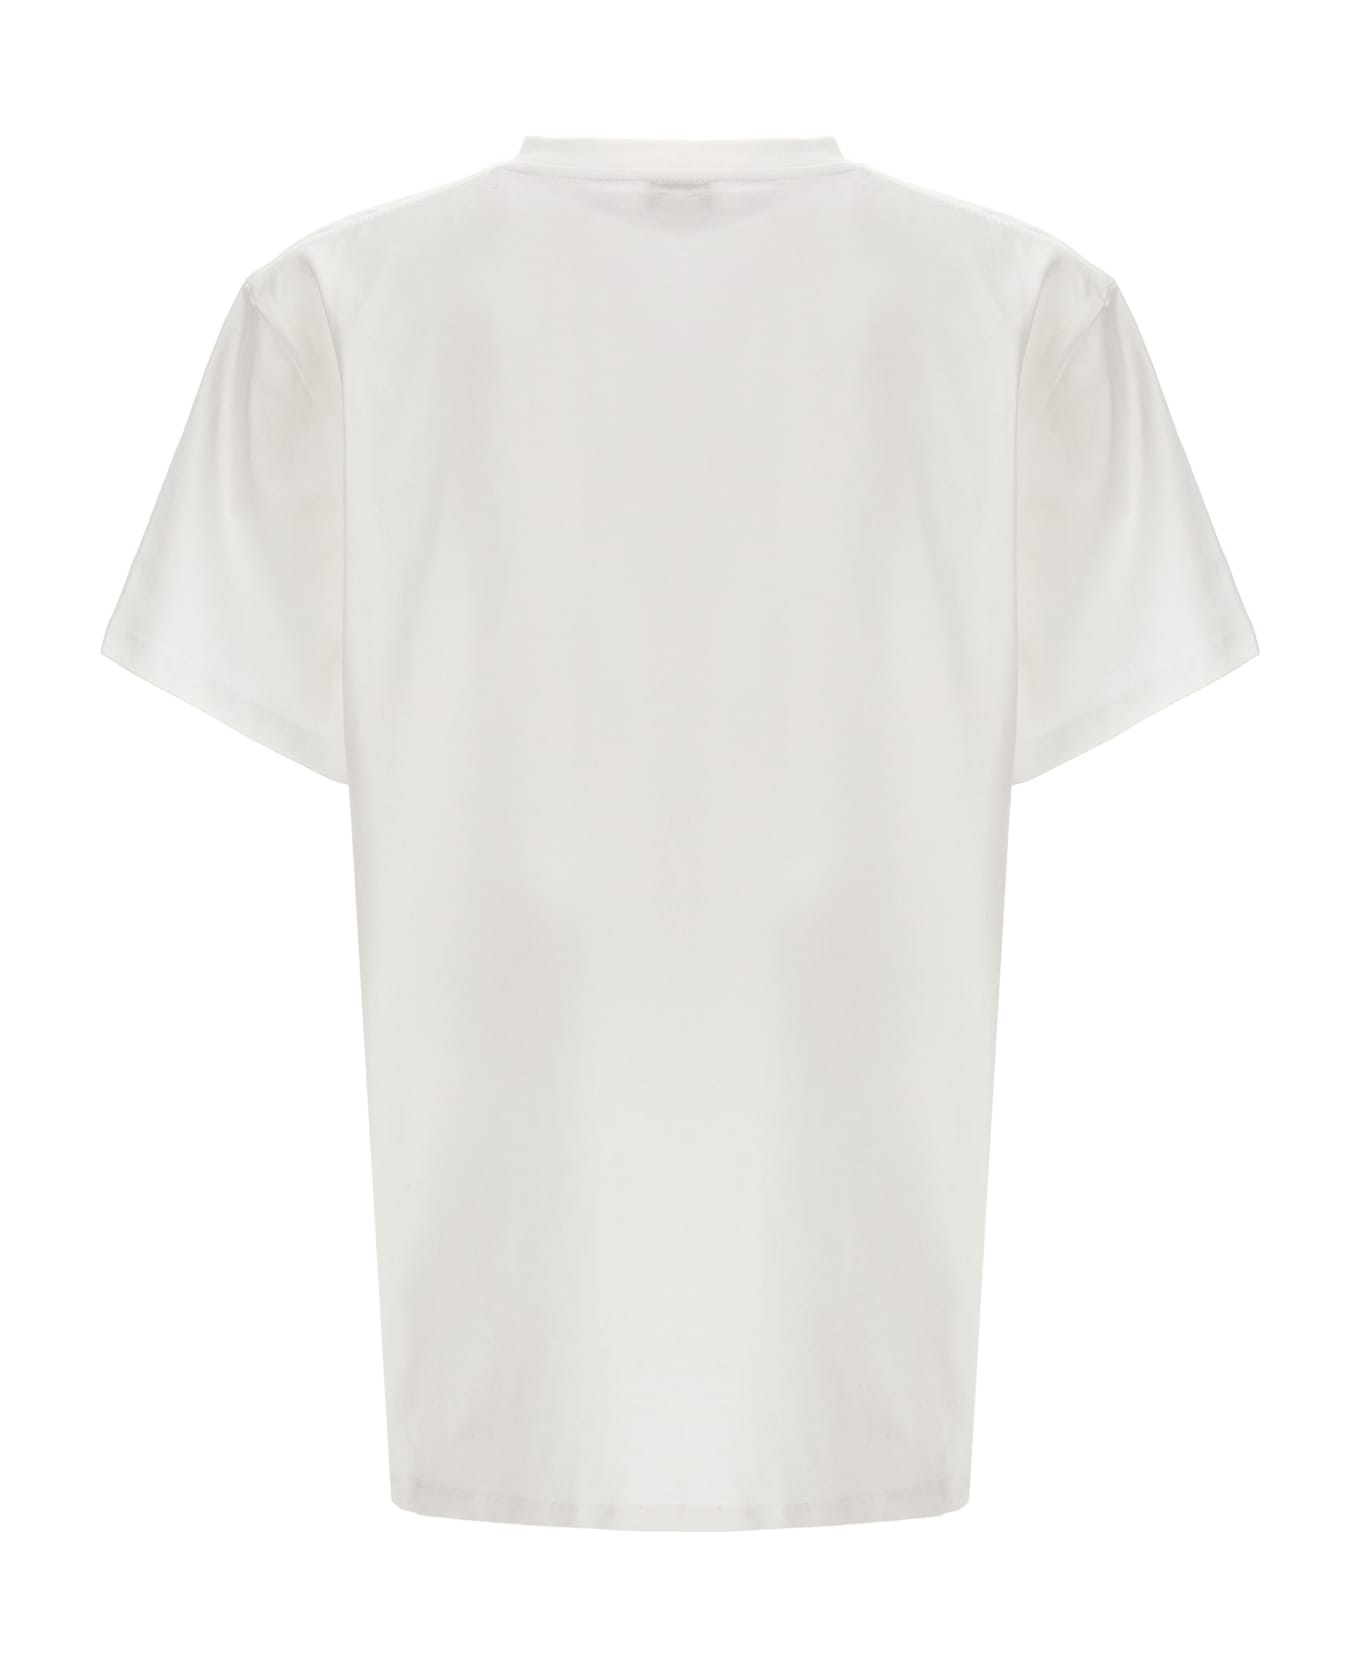 Alexander McQueen Obscured Skull Organic Cotton T-shirt - White